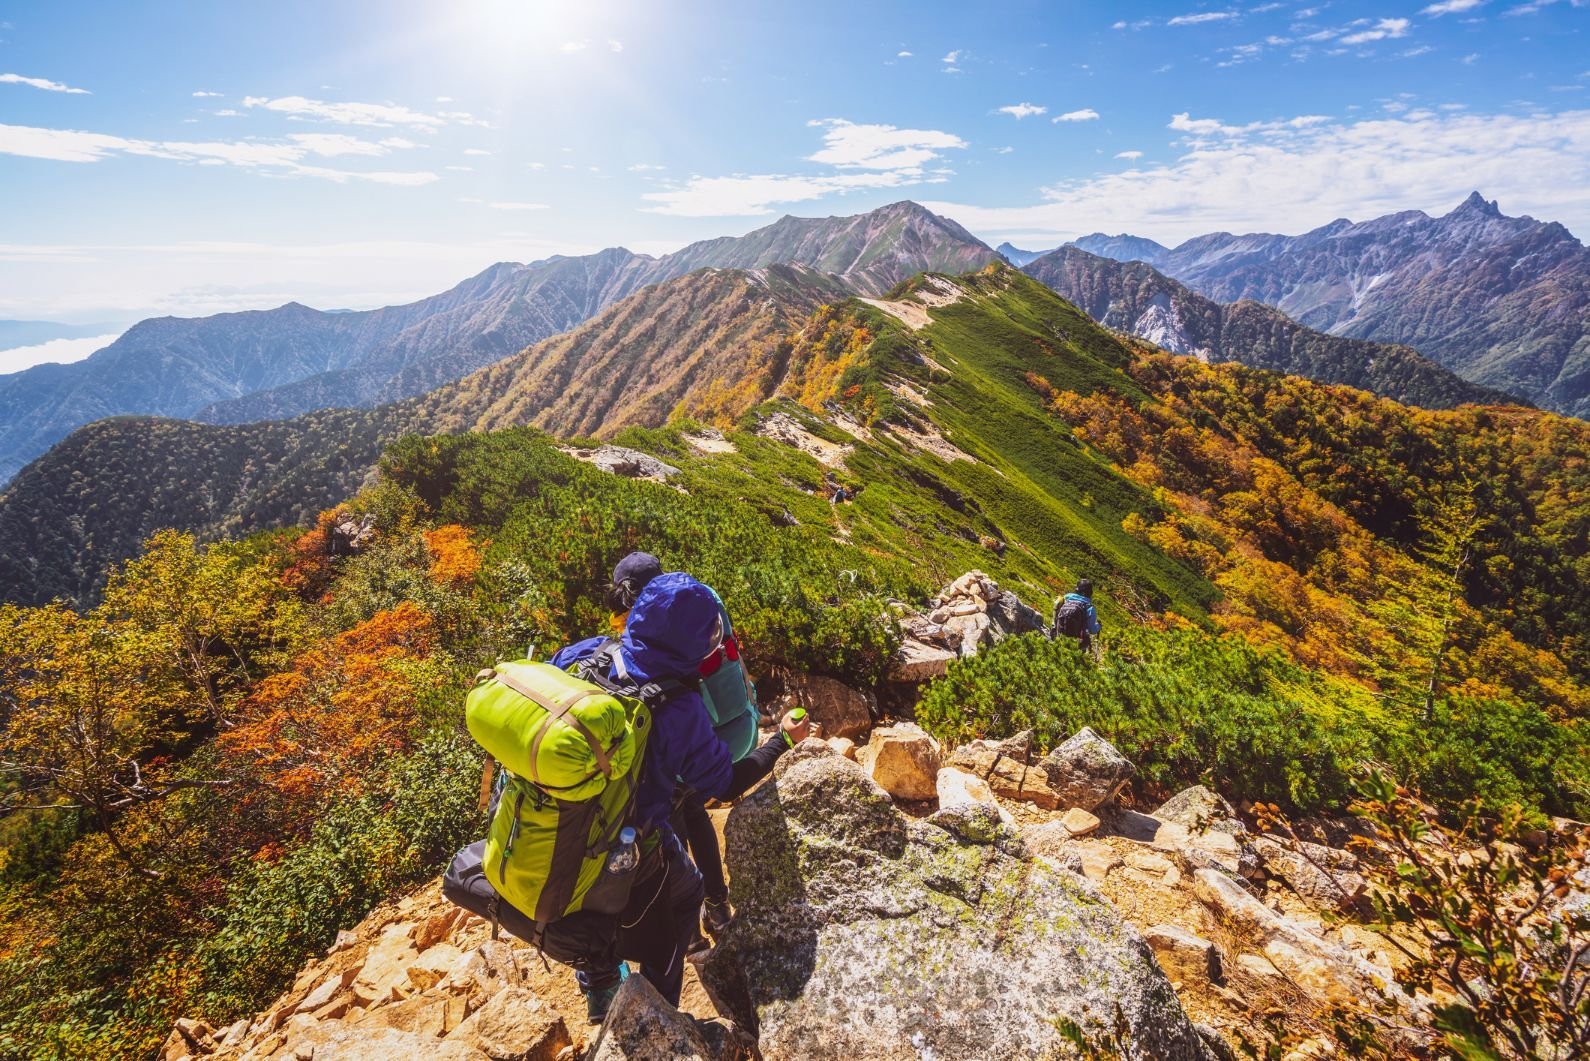 https://www.muchbetteradventures.com/magazine/content/images/size/w2000/2021/03/Best-Hikes-in-Japan-Alps.jpg